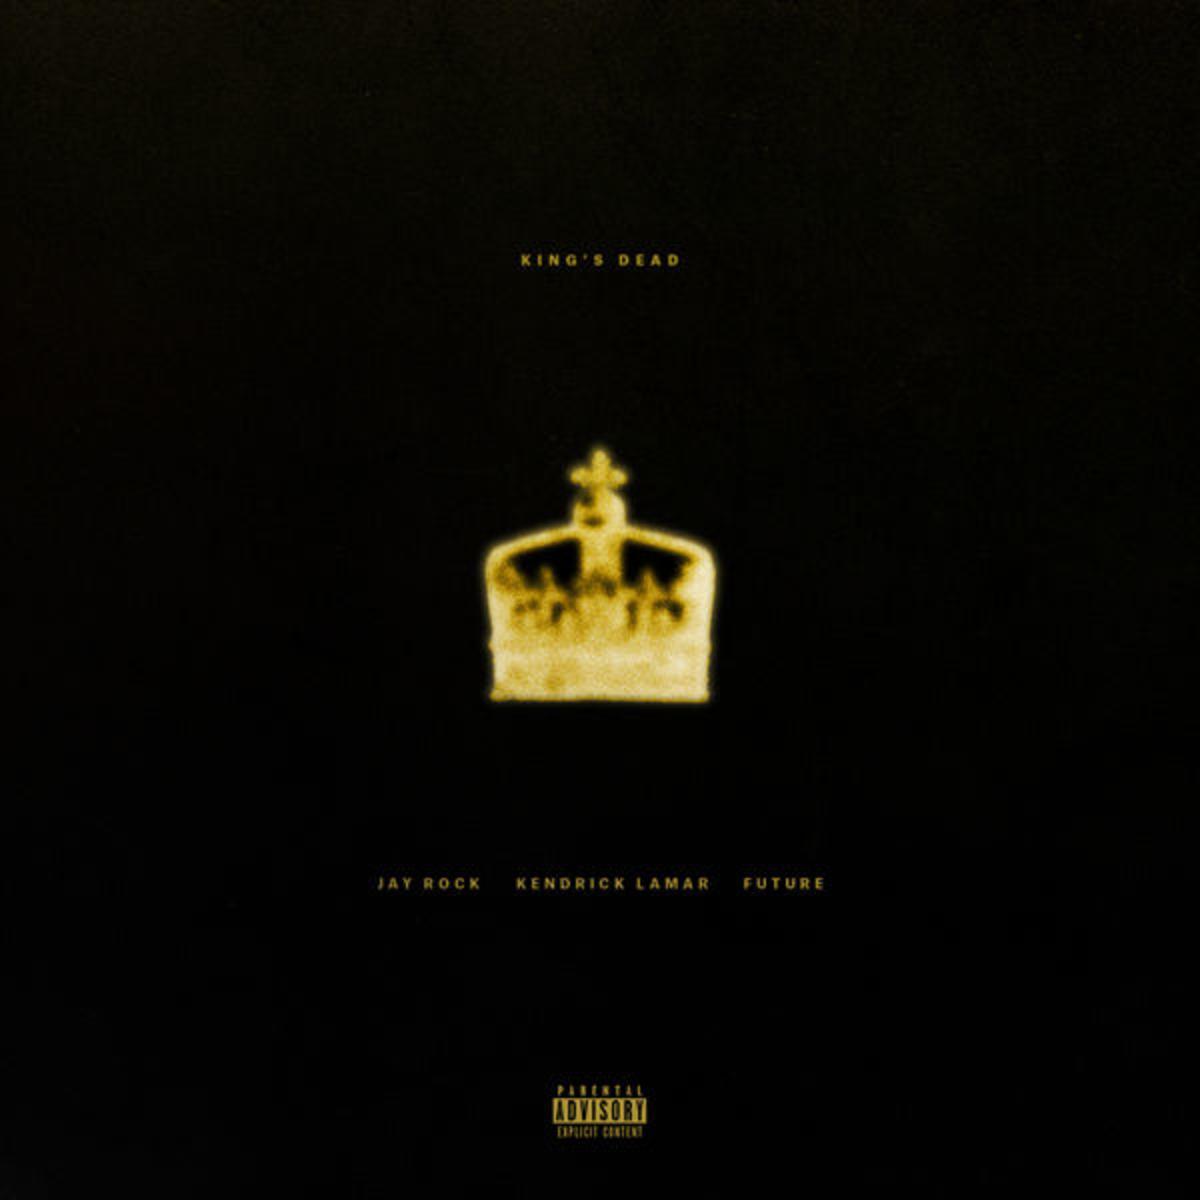 Art for King's Dead  by Jay Rock, Kendrick Lamar, Future & James Blake